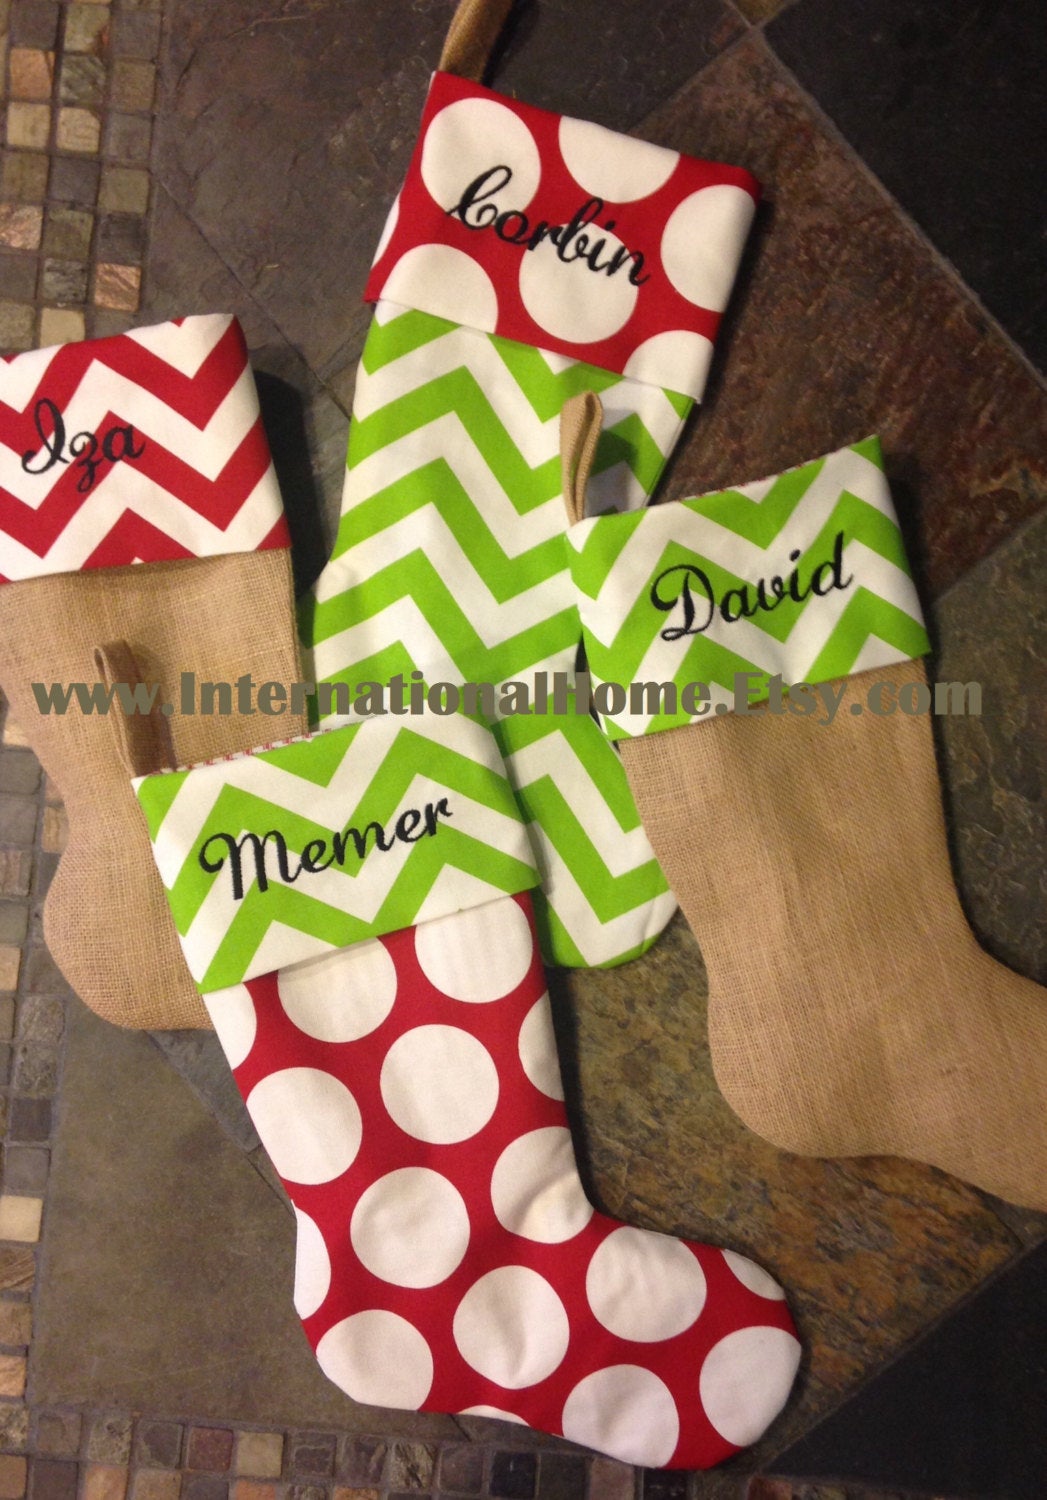 Set of 6 Custom made Christmas Stockings w/ FREE SHIPPING!